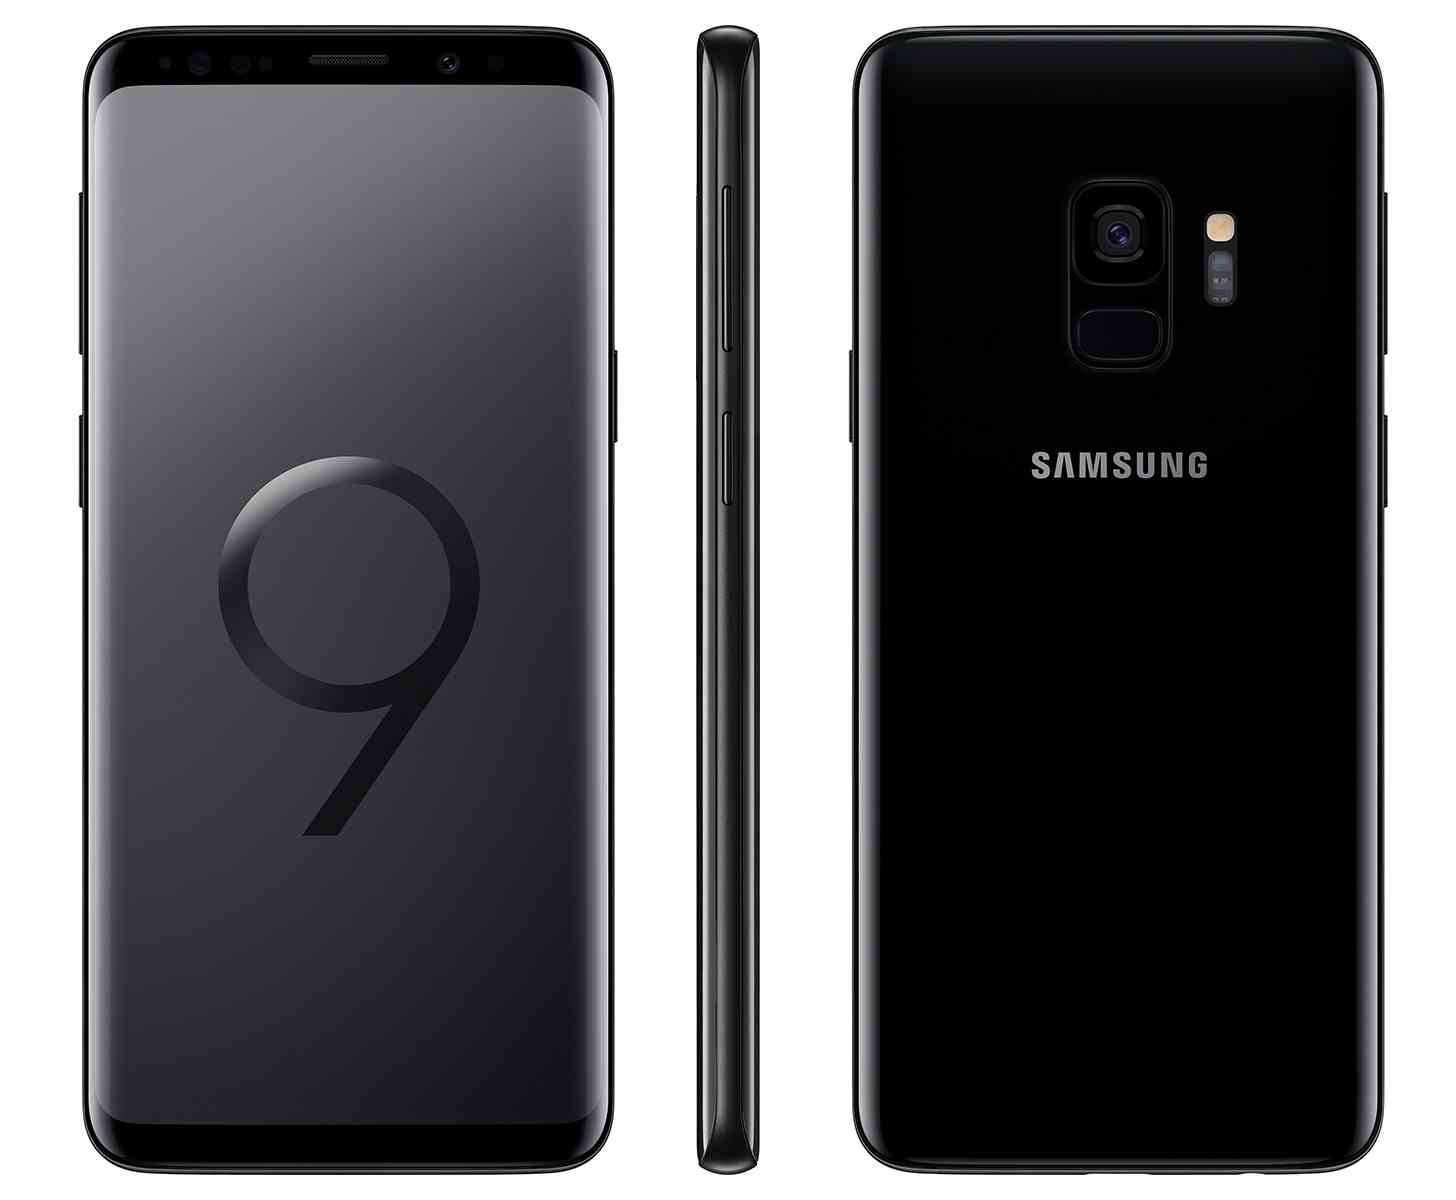 Samsung Galaxy S9 black official